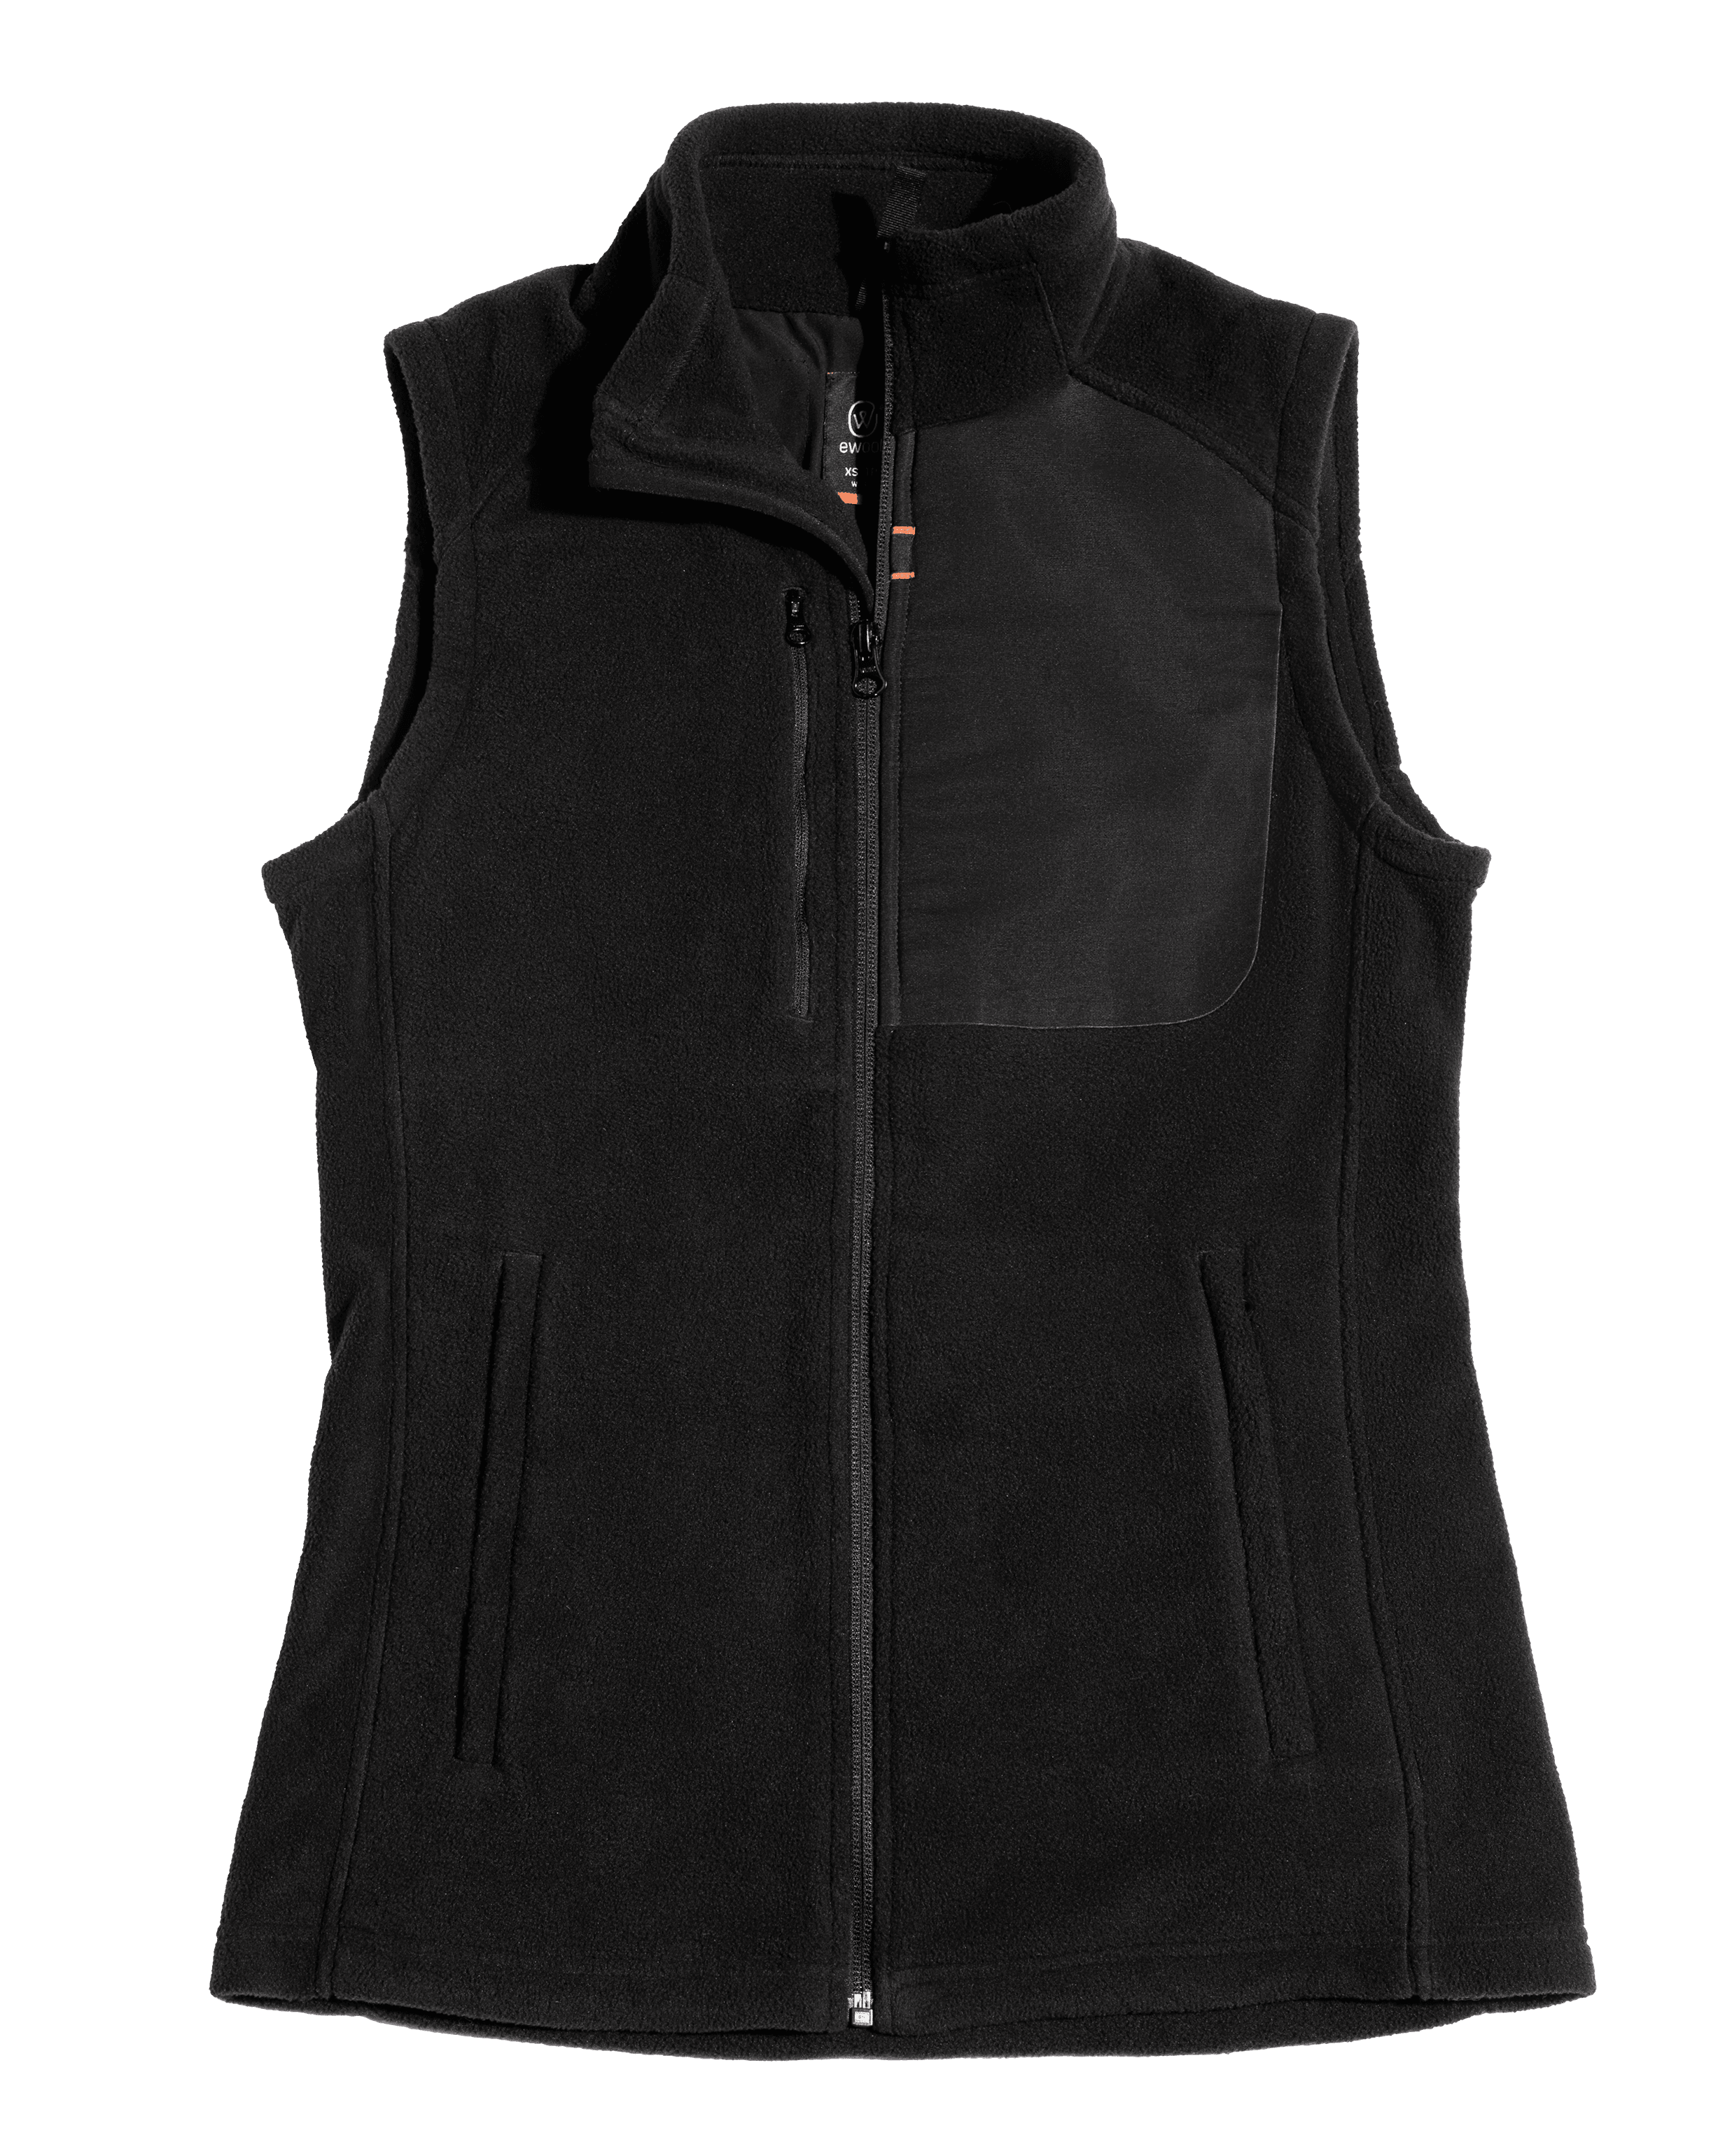 METRO Heated Vest for Women